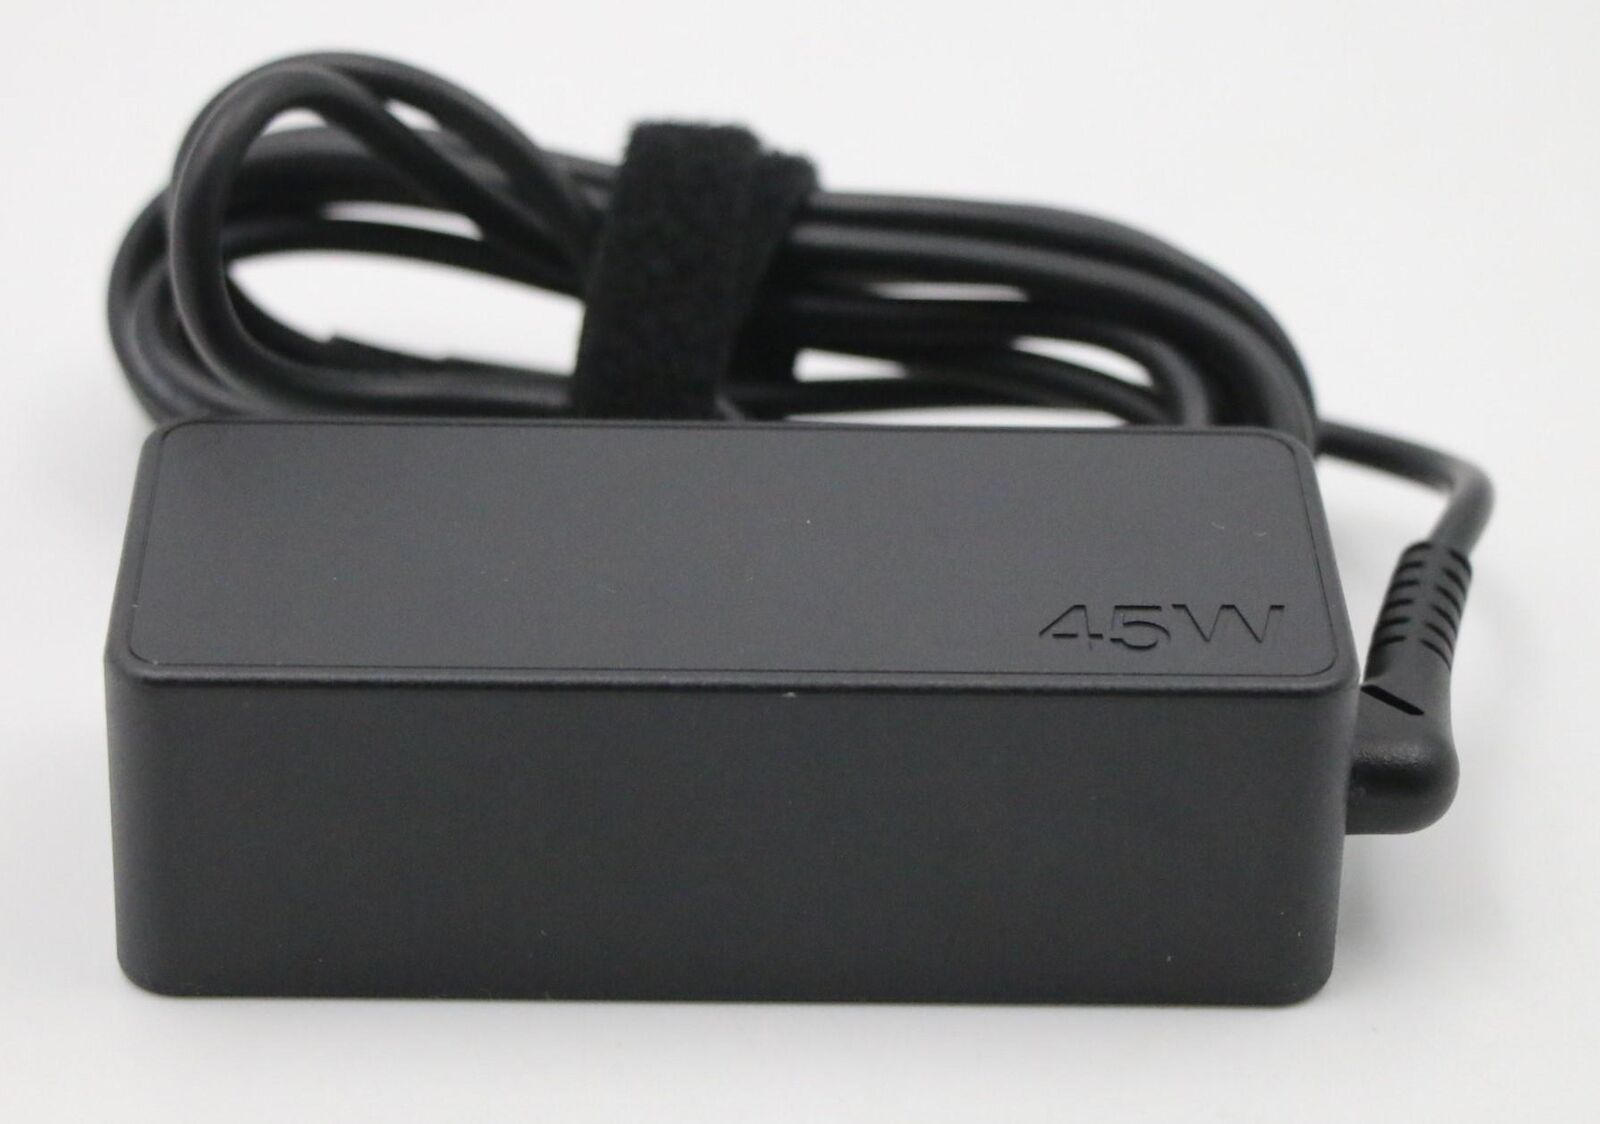 LENOVO ThinkPad Yoga 11e 5th Gen 45W Genuine AC Power Adapter Charger